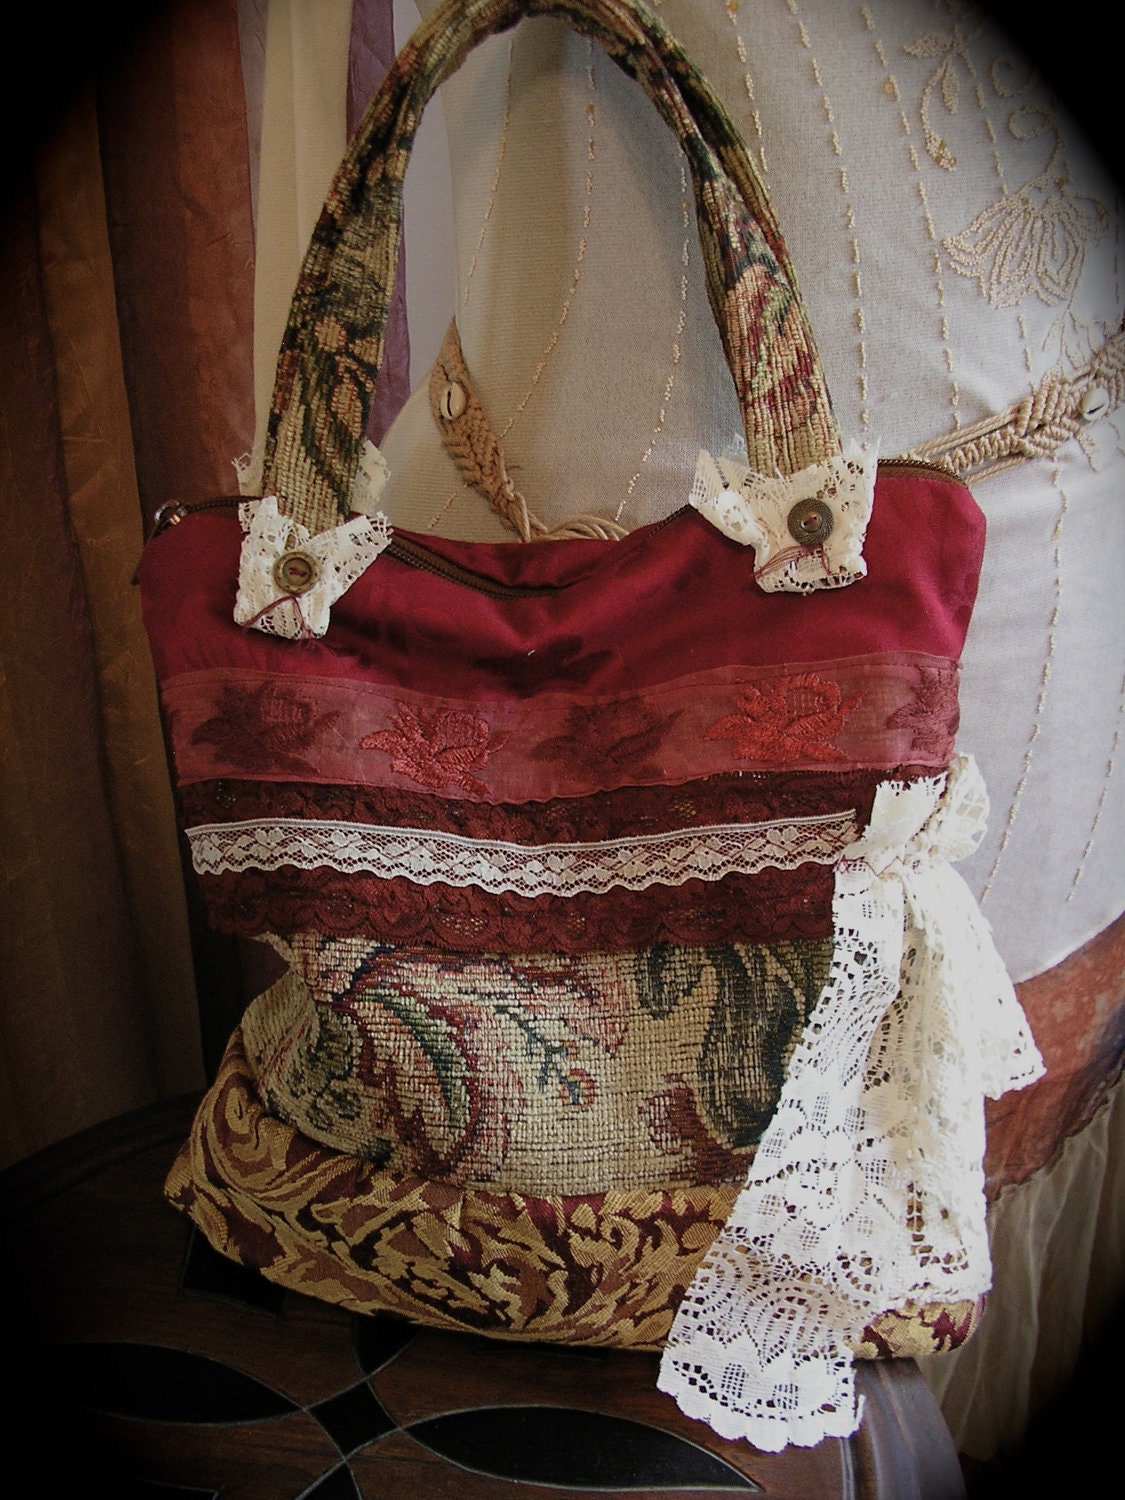 Small Bohemian Handbag earthy red hues textured fabric lace